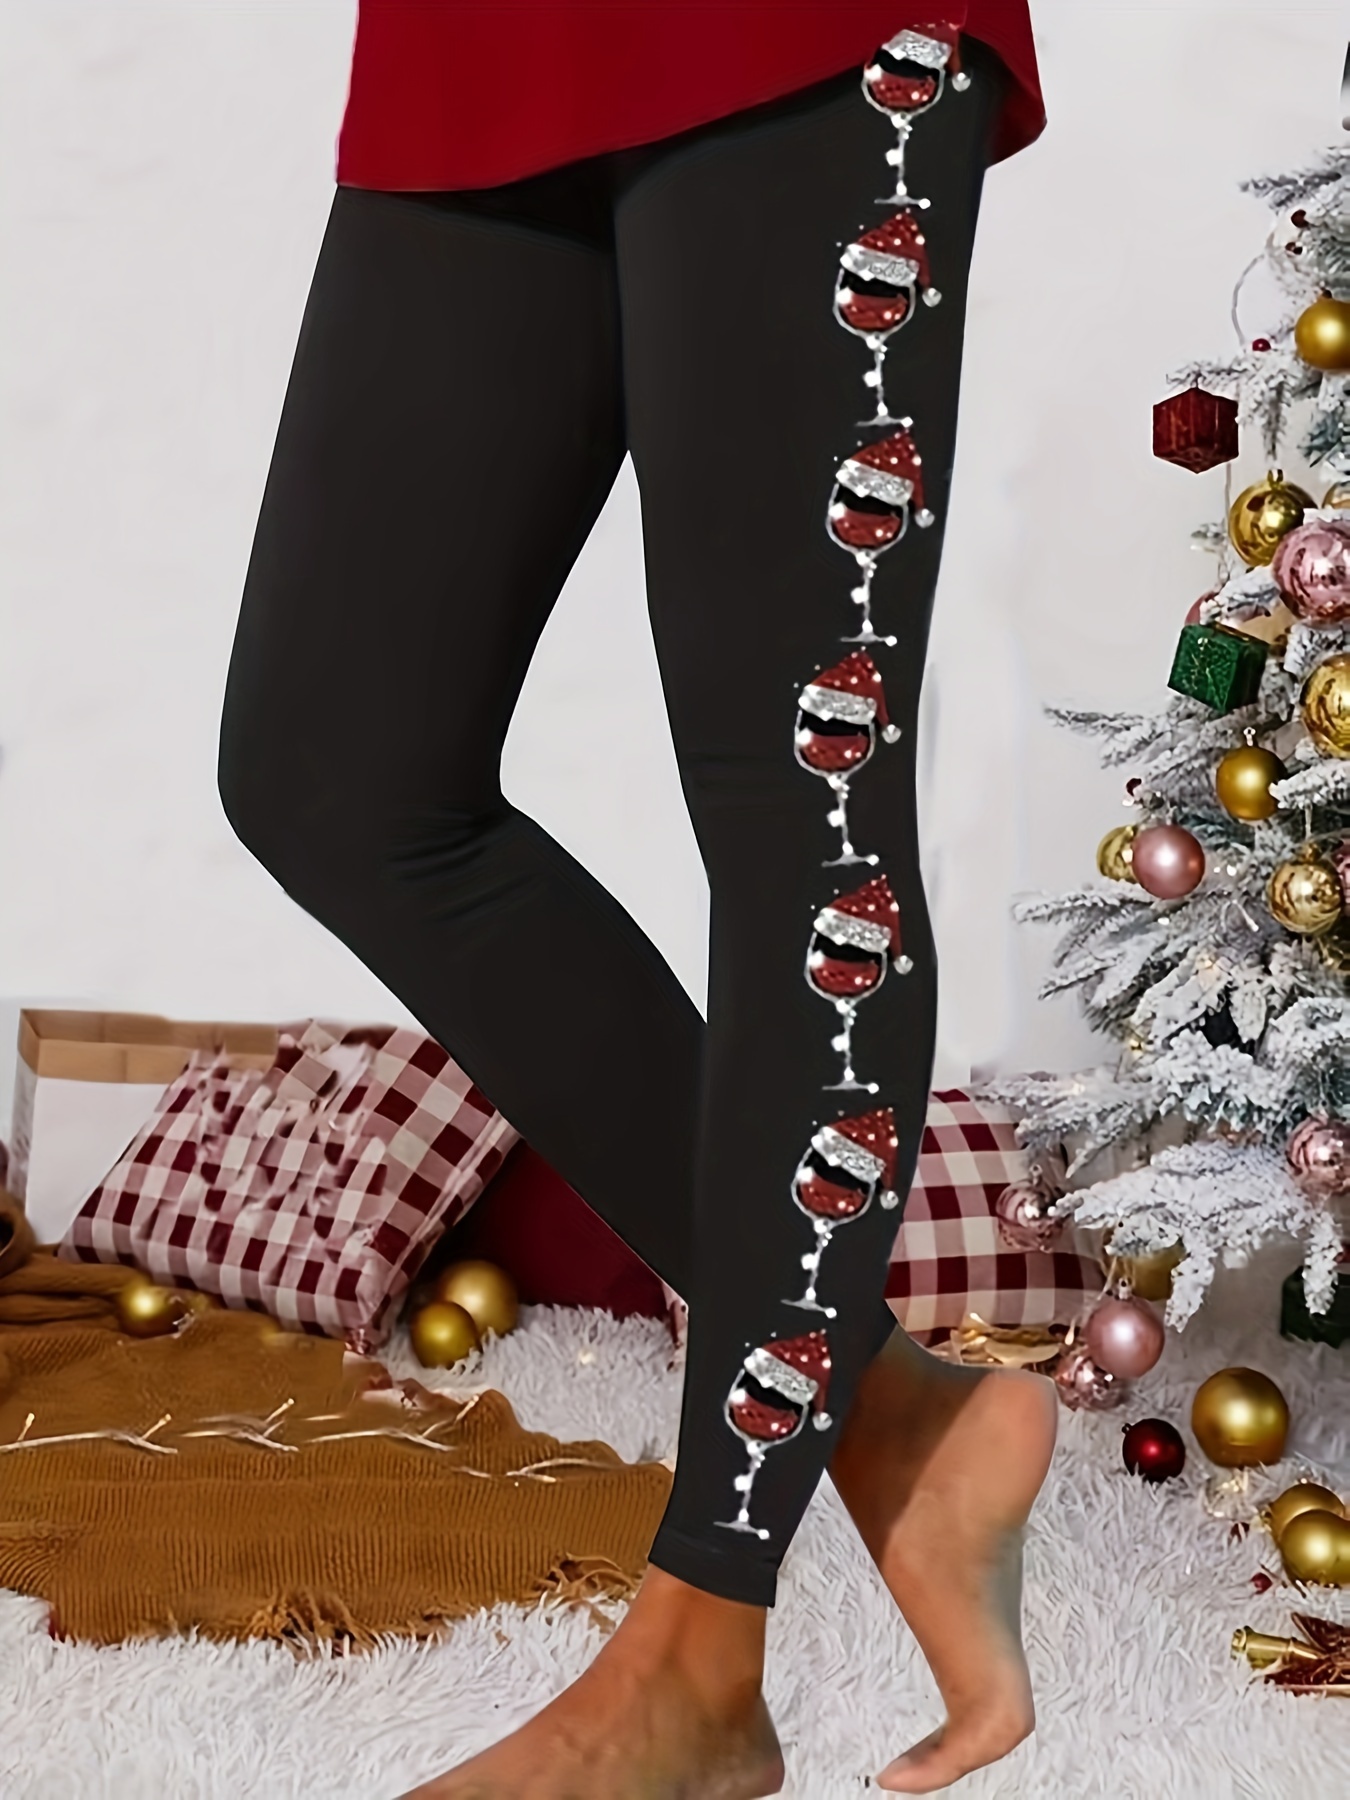 XMAS Leggings Womens Christmas Elastic Snowflake Pants Stocking Legging AUS